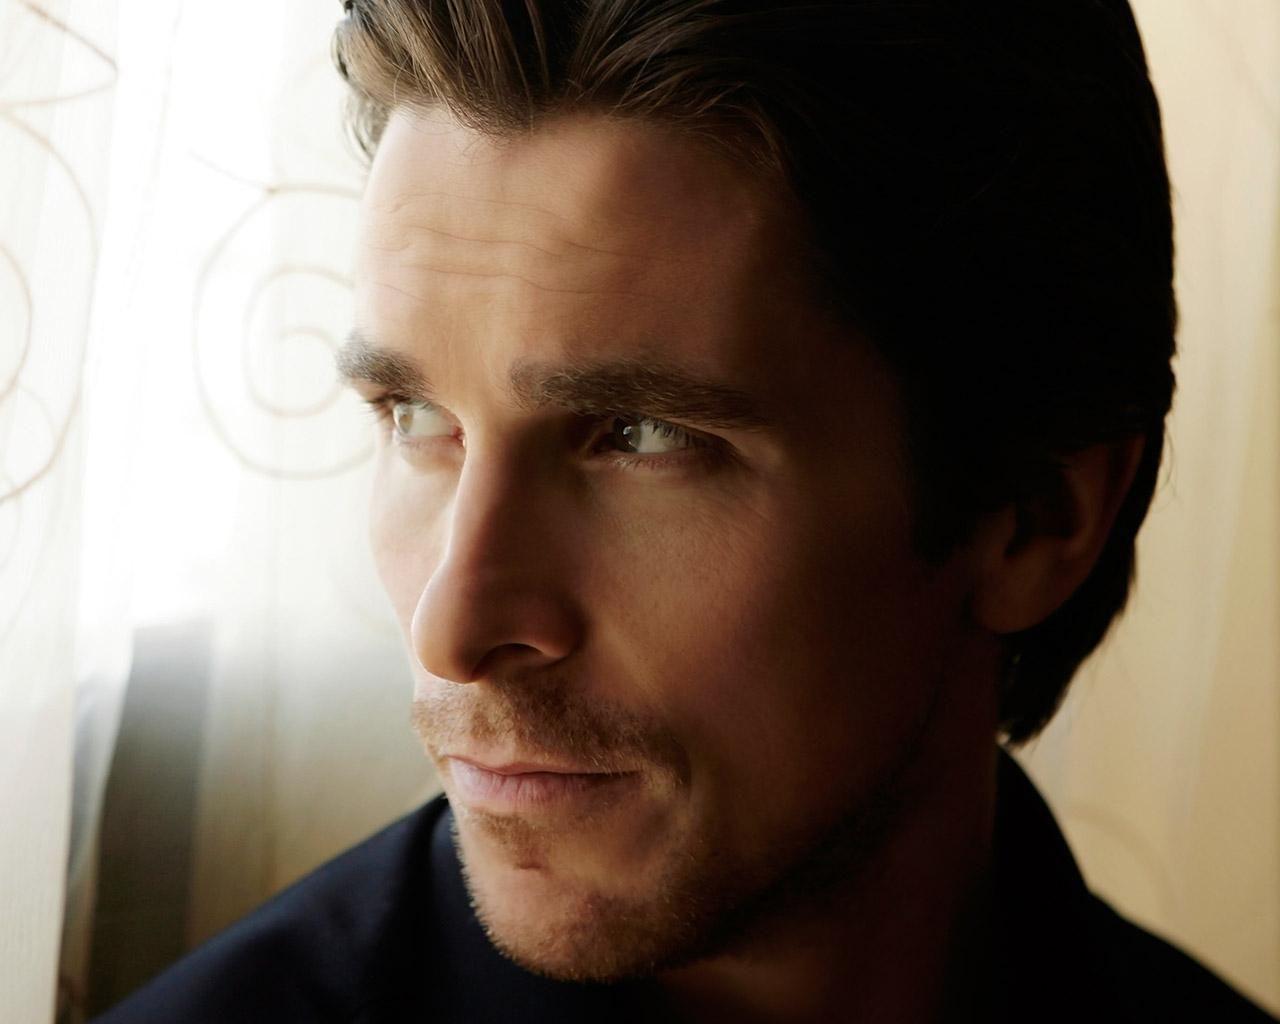 Wallpaper Christian Bale Celebrities Image Download